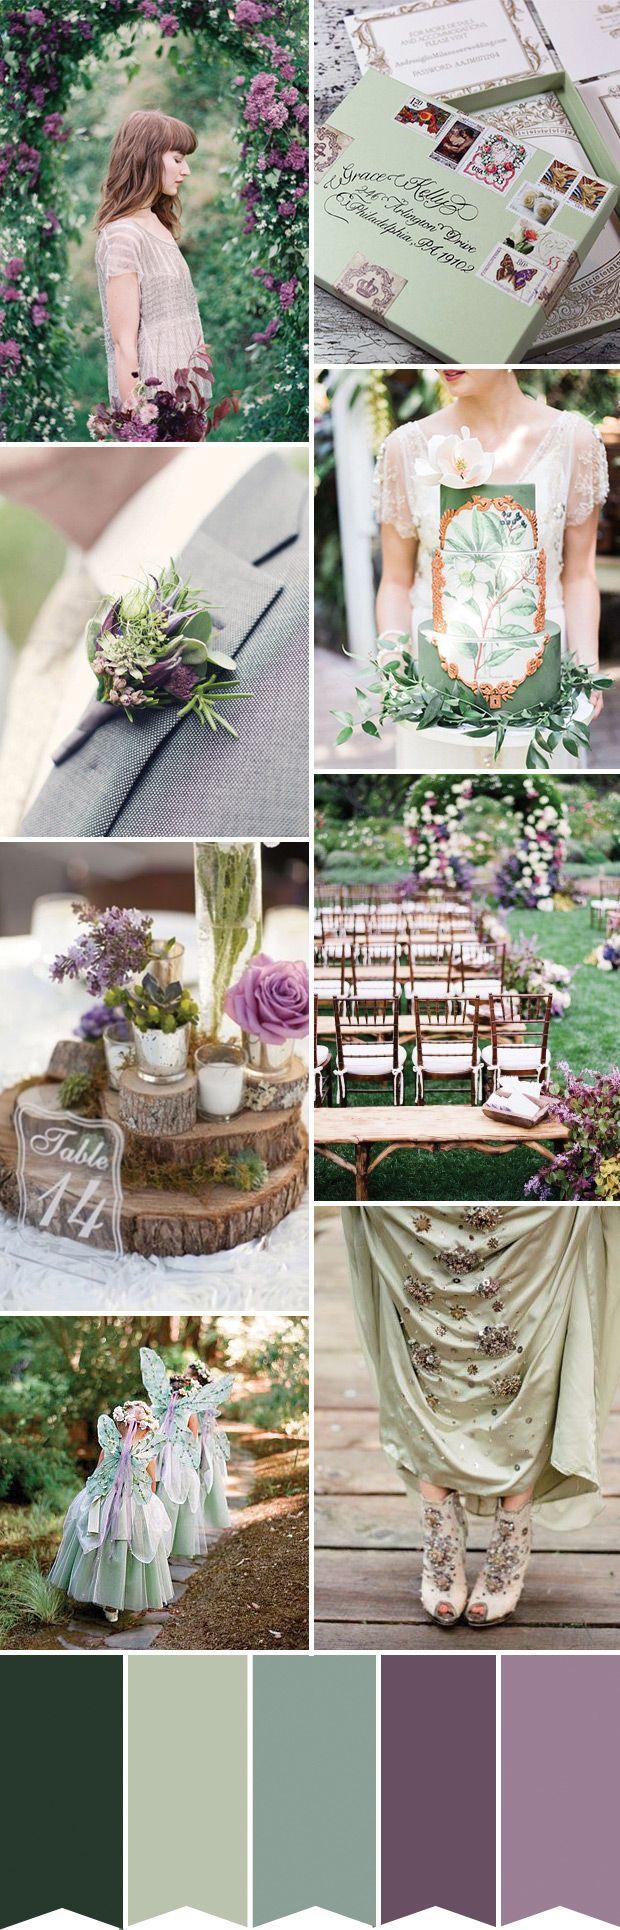 زفاف - Happily Ever After - Fairytale Purple And Green Wedding Inspiration